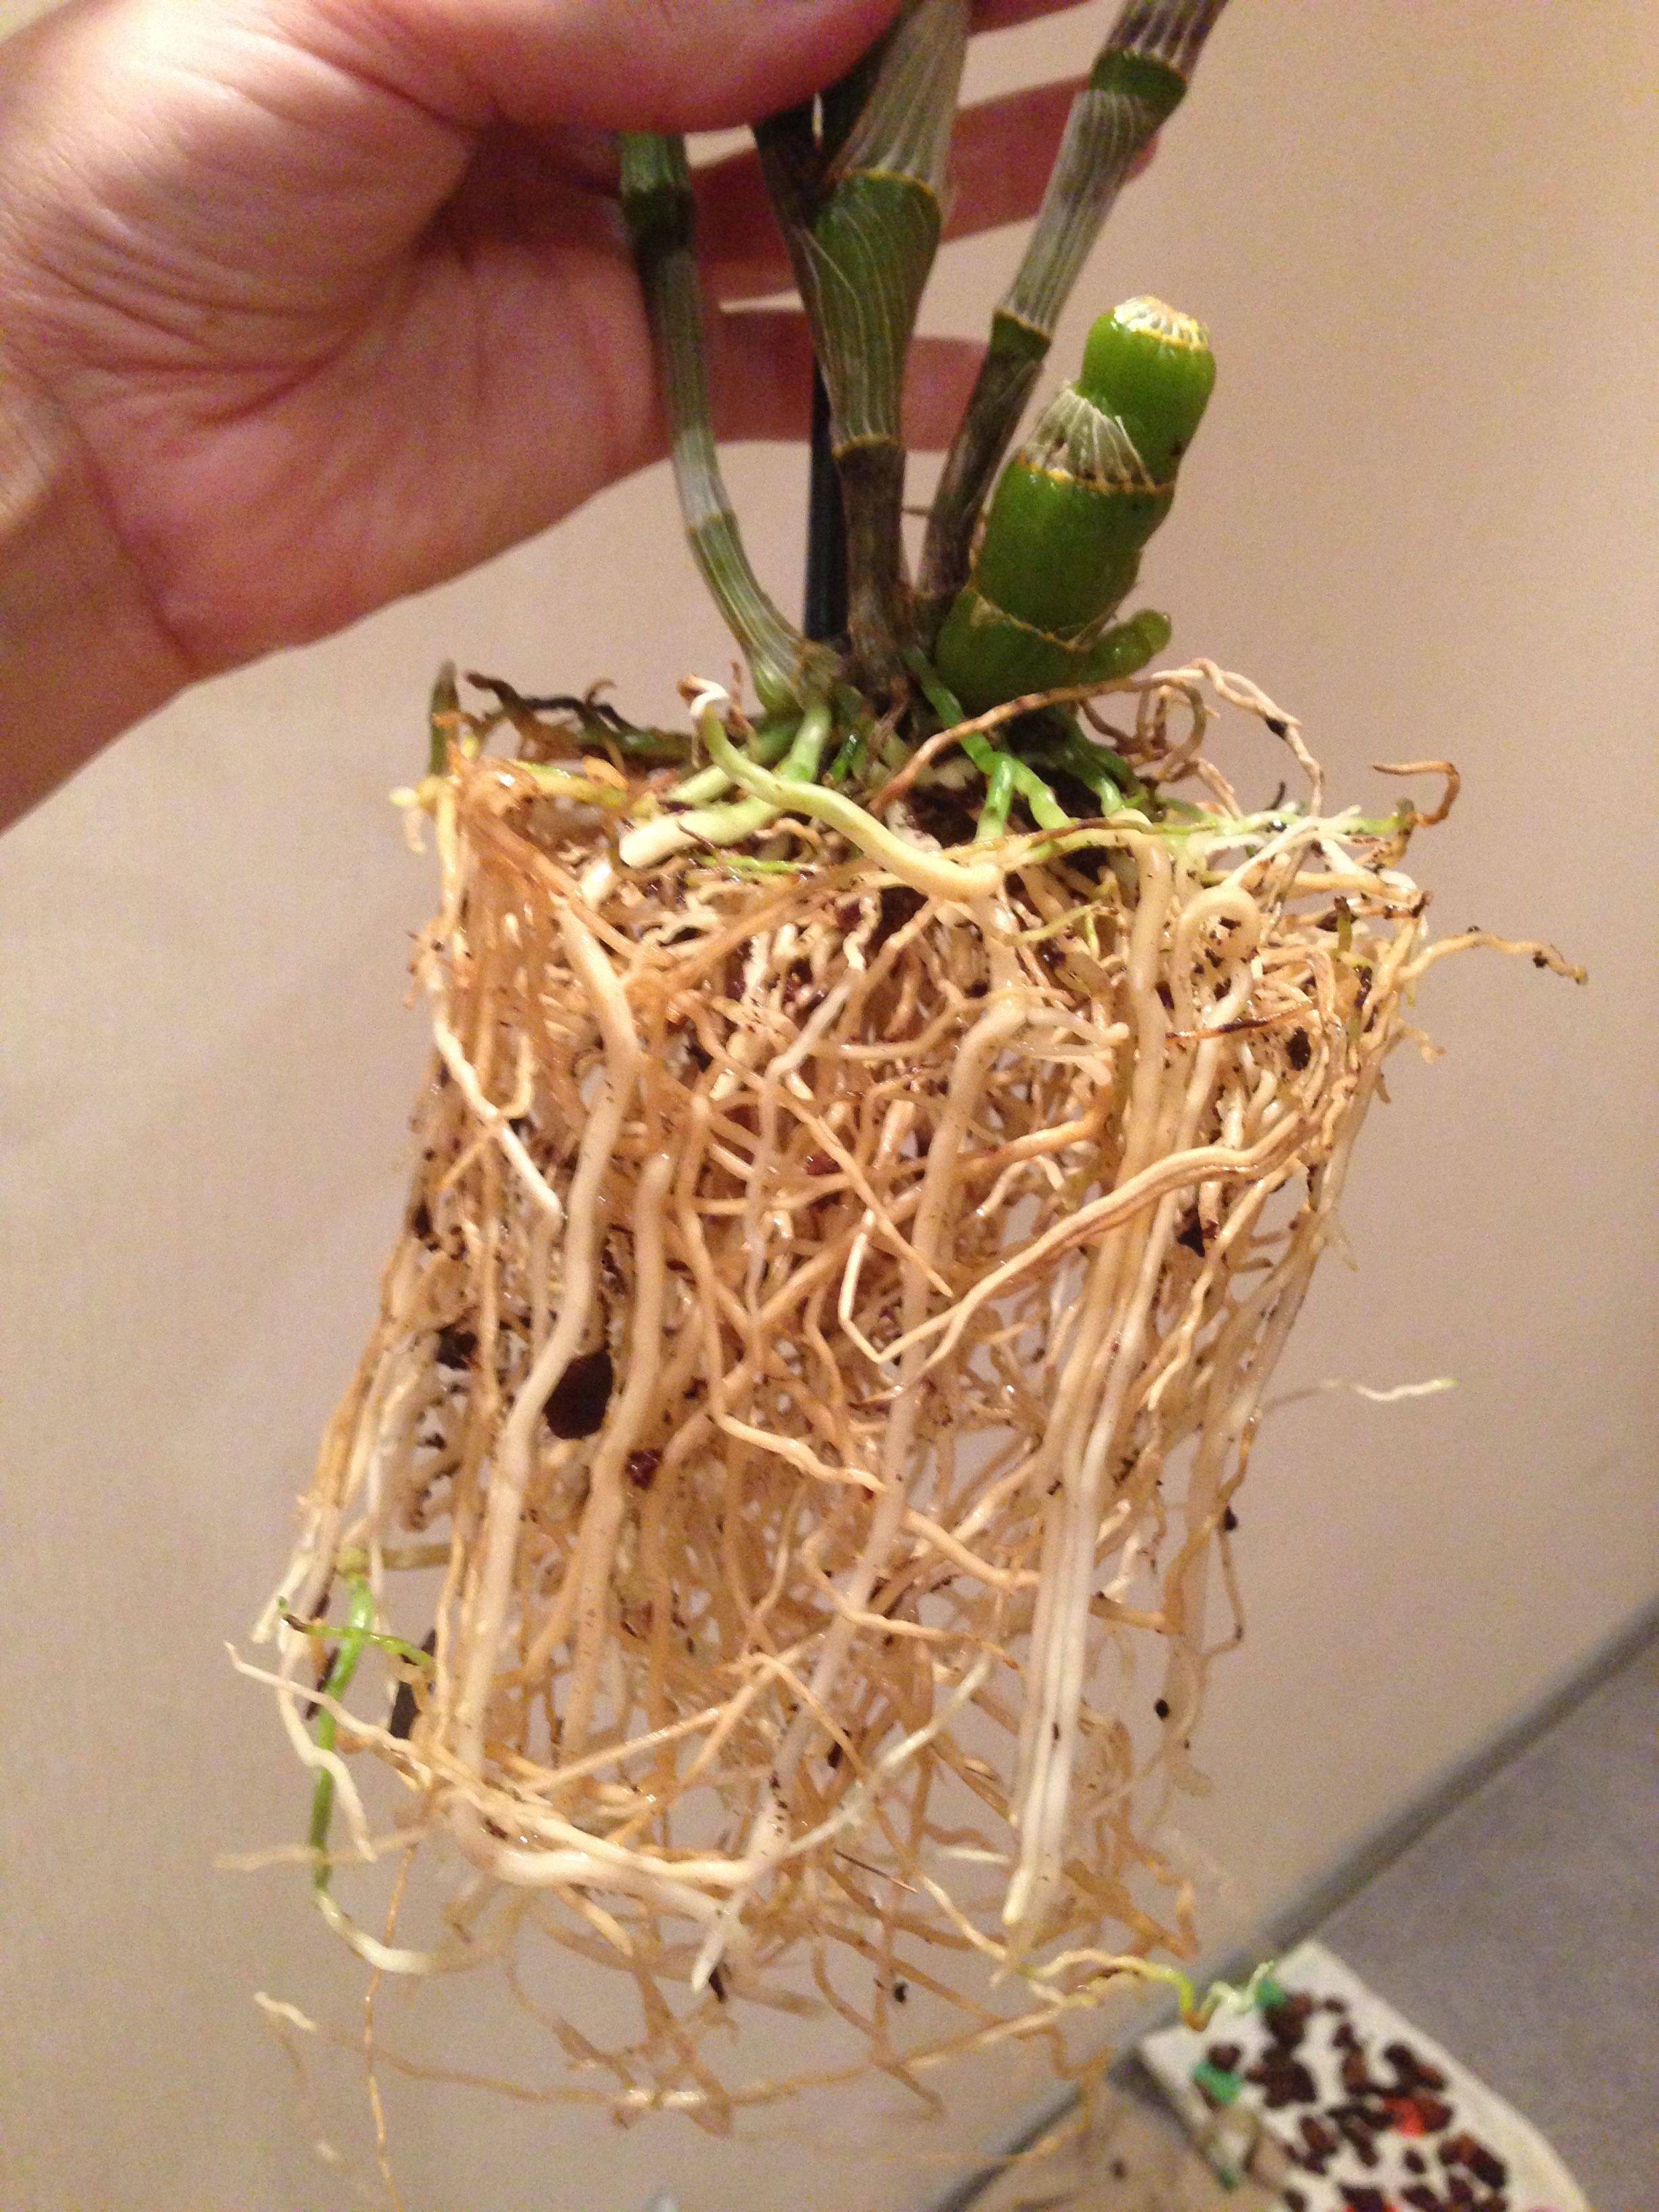 Дендробиум нобиле. уход в домашних условиях|блог об орхидеях